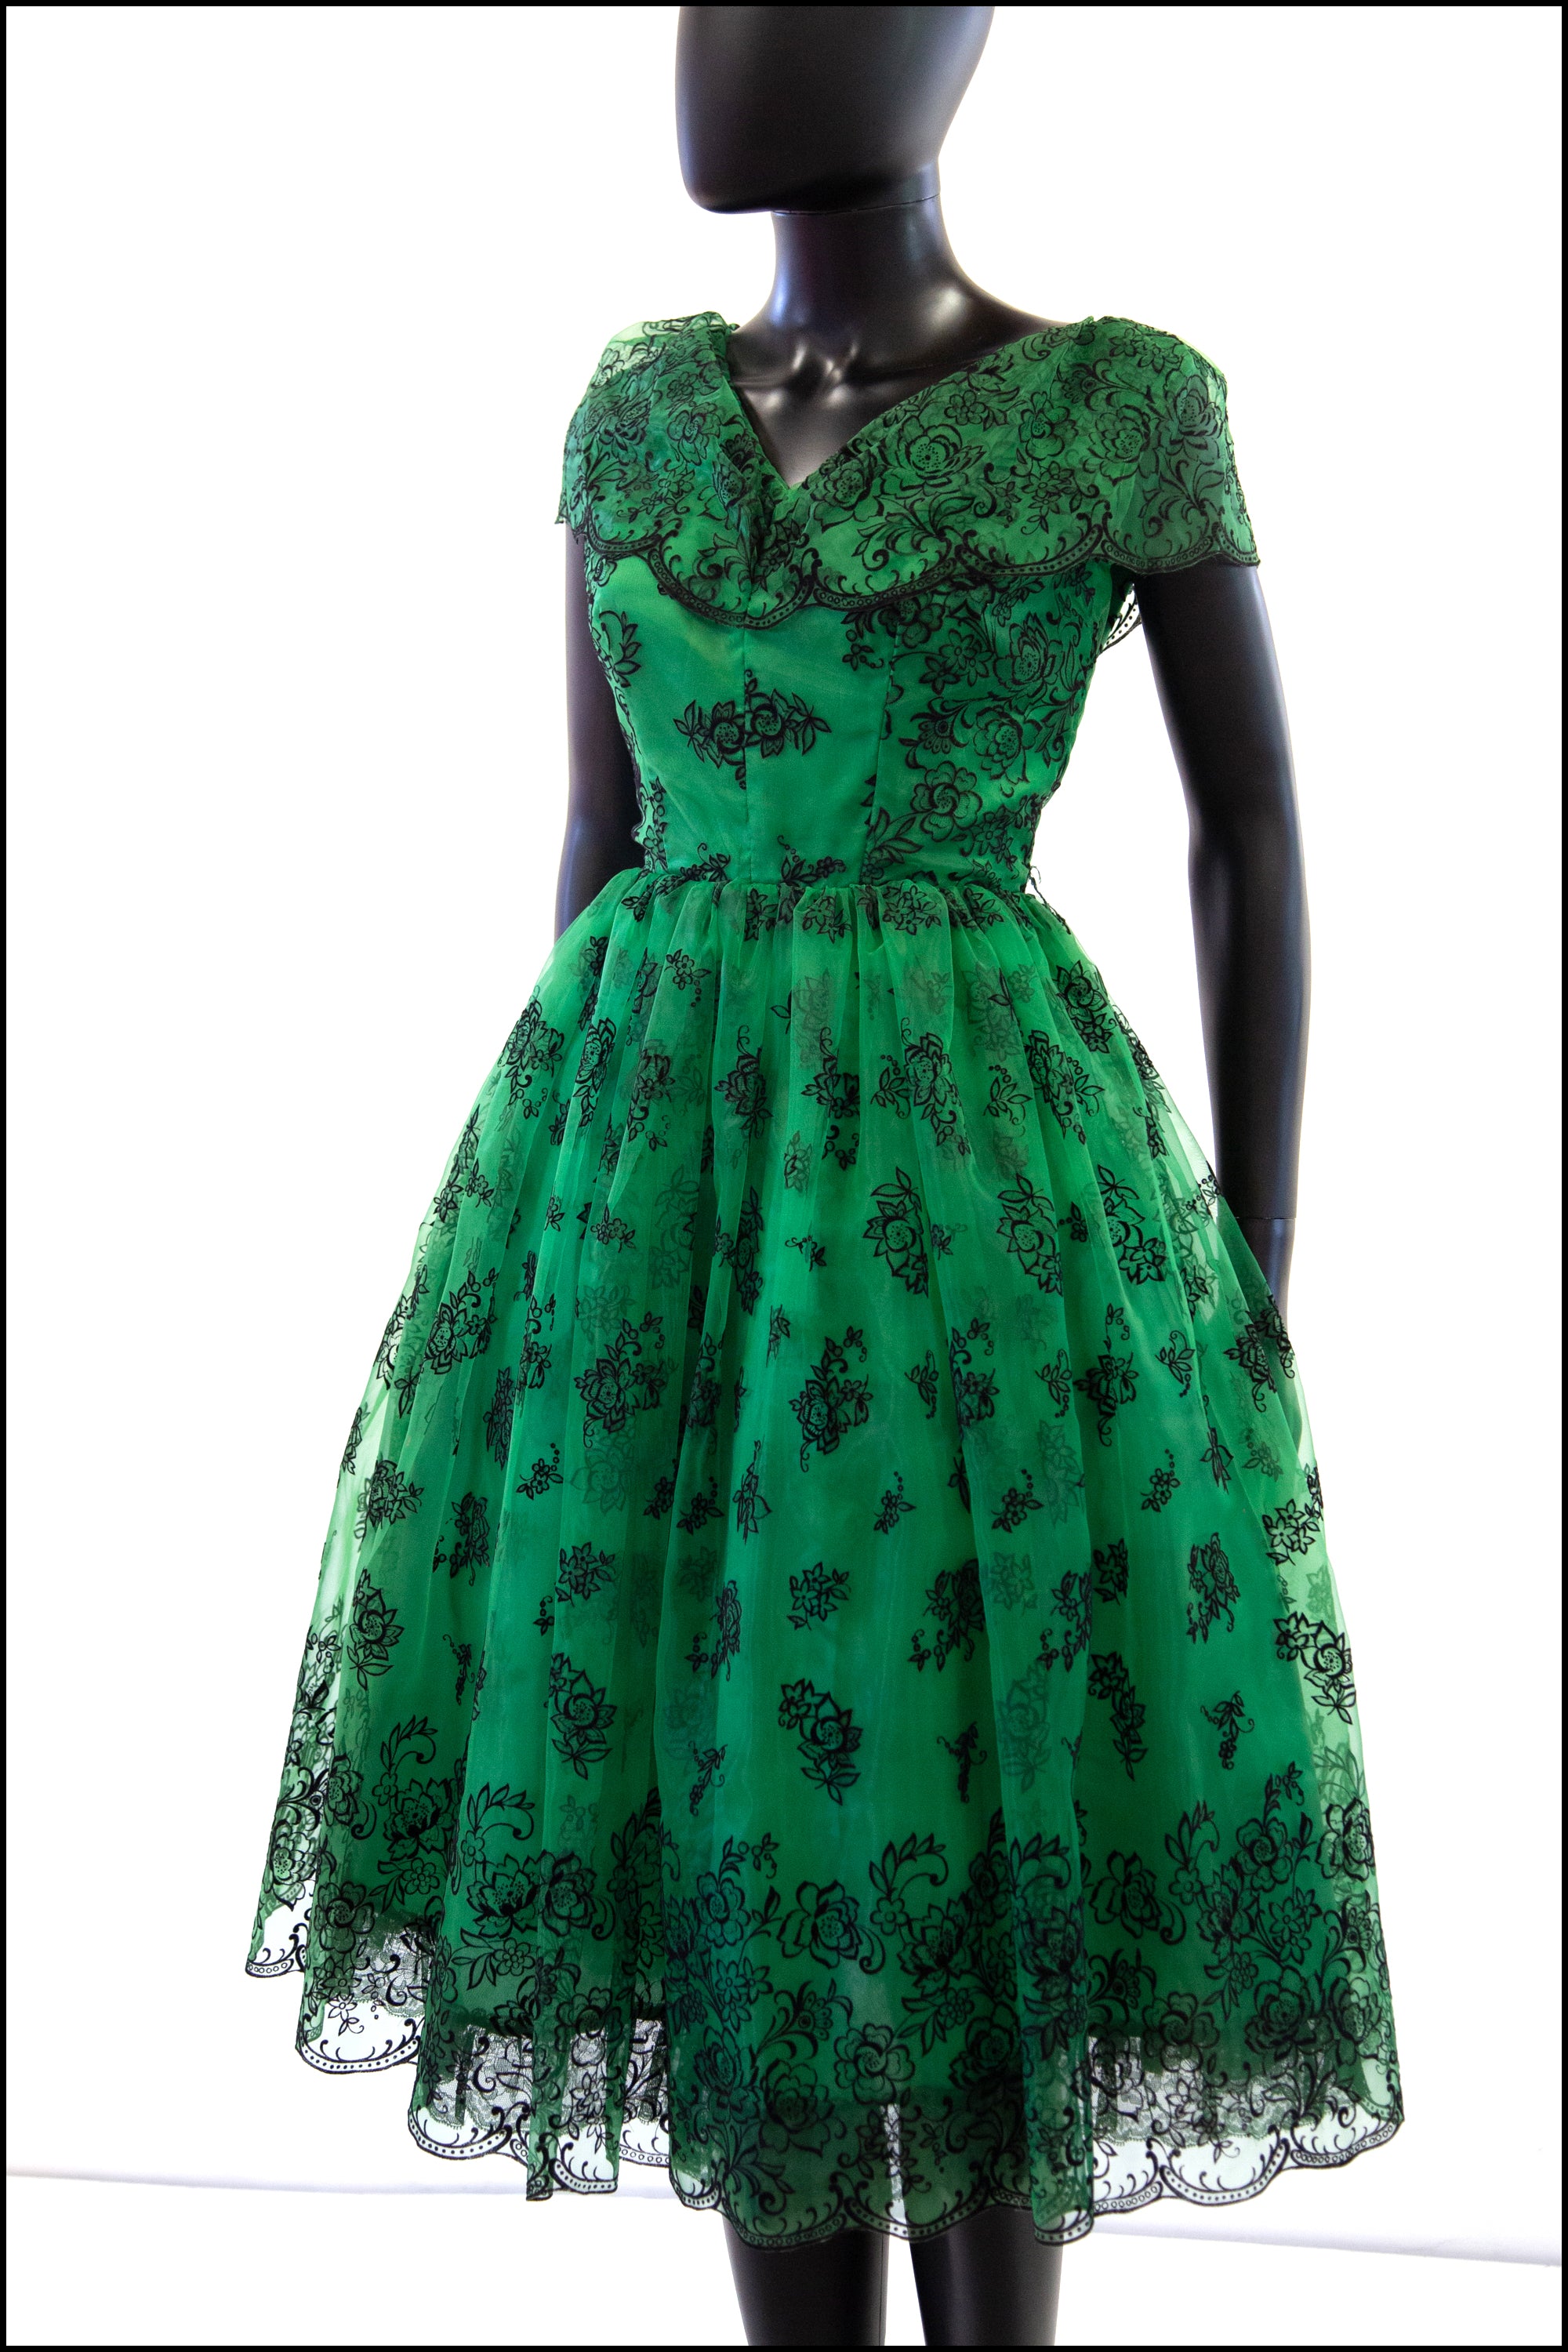 1950s vintage green lace midi dress Alexandra King